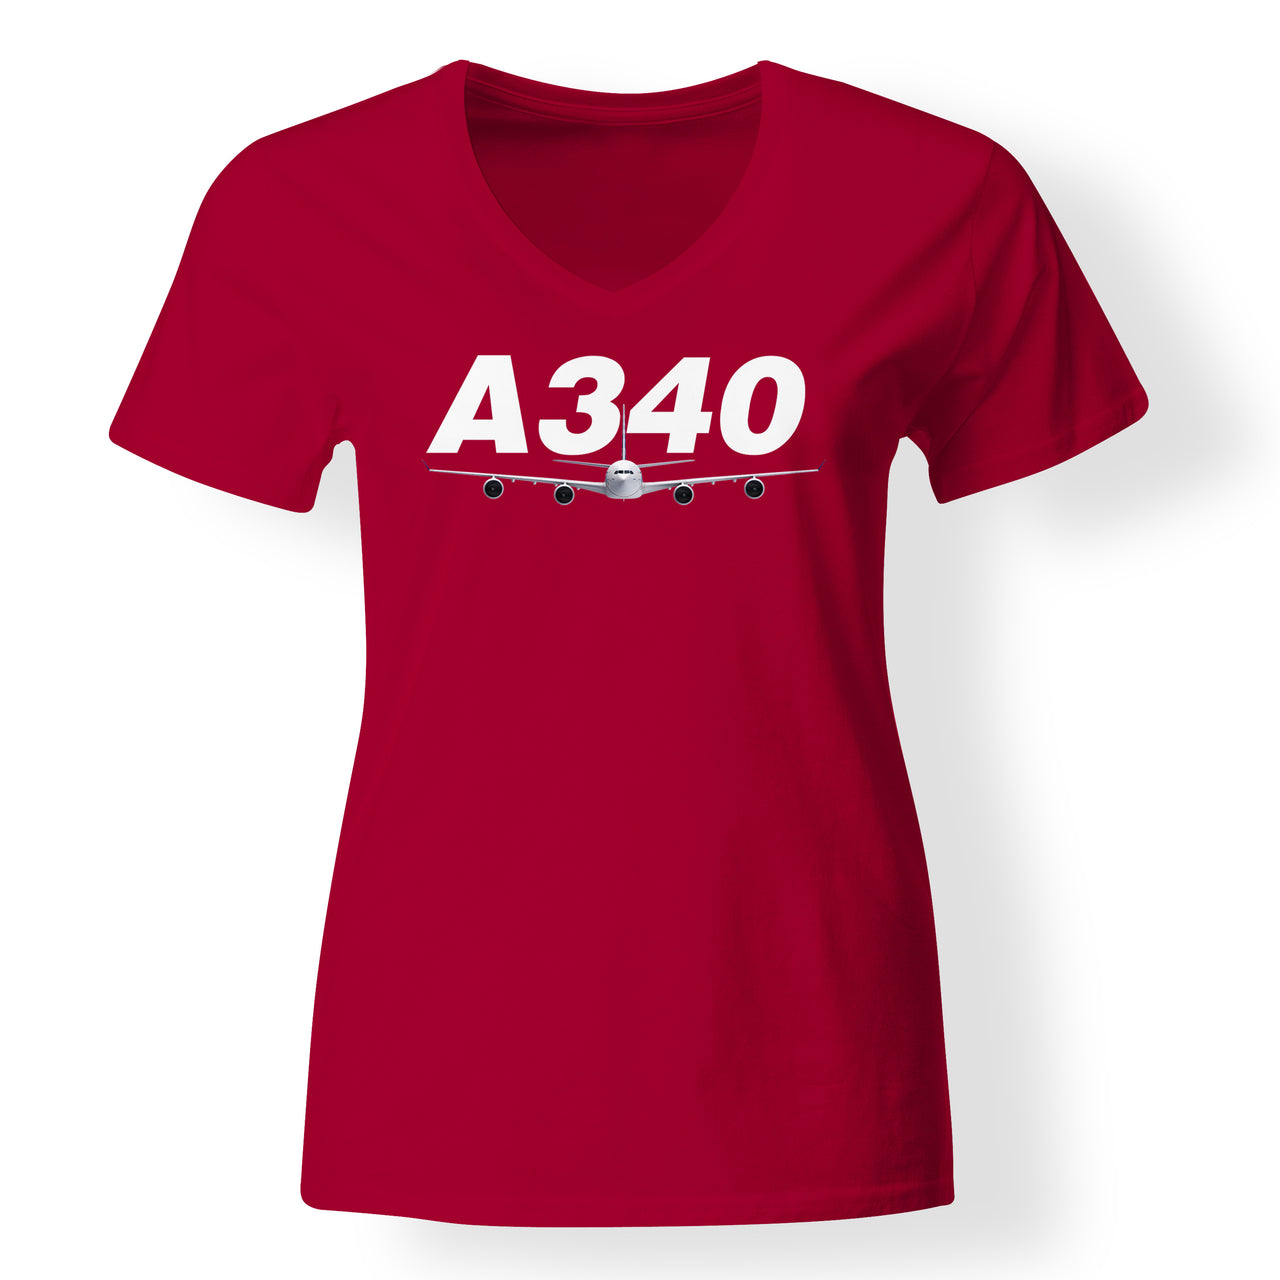 Super Airbus A340 Designed V-Neck T-Shirts